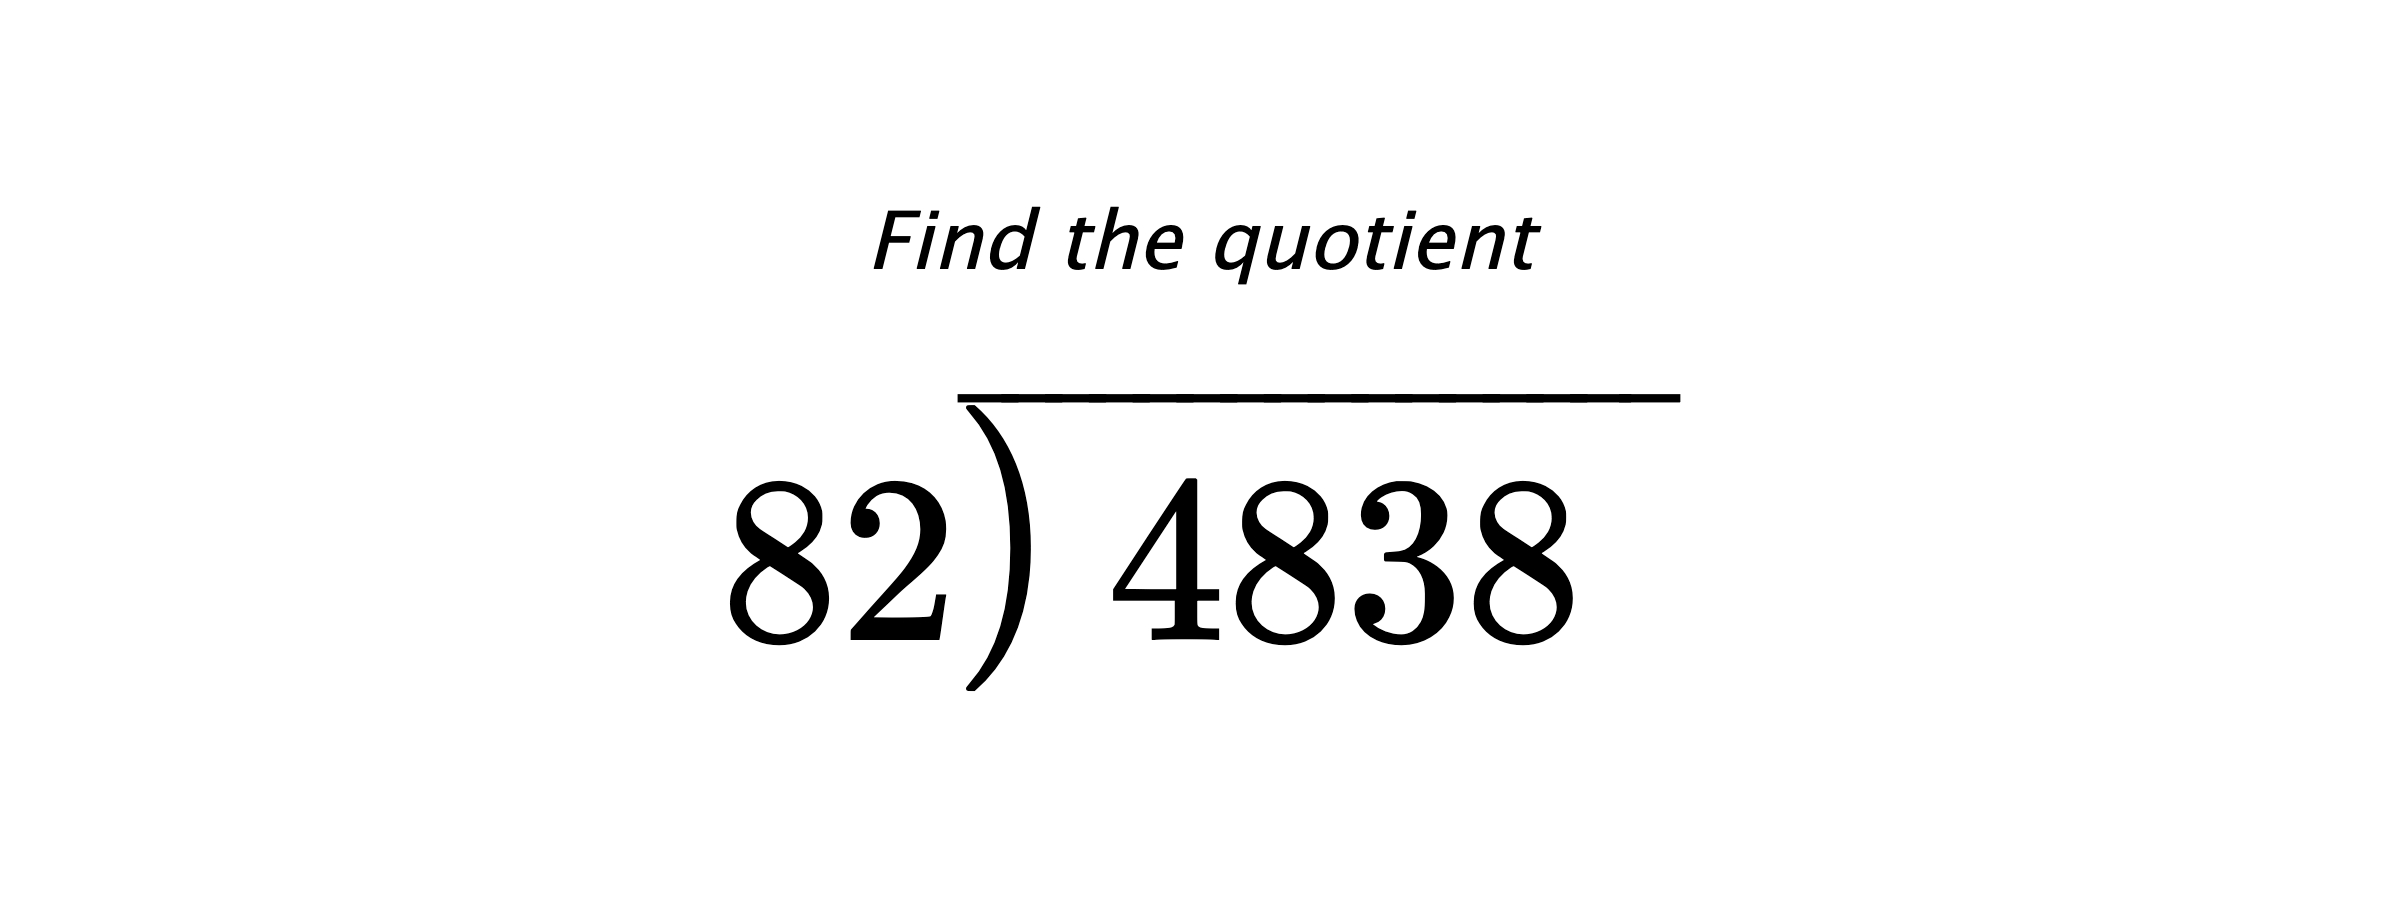 Find the quotient $ 82{\overline{\smash{\raise.3ex\hbox{$\big)$}}\,4838\phantom{)}}} $